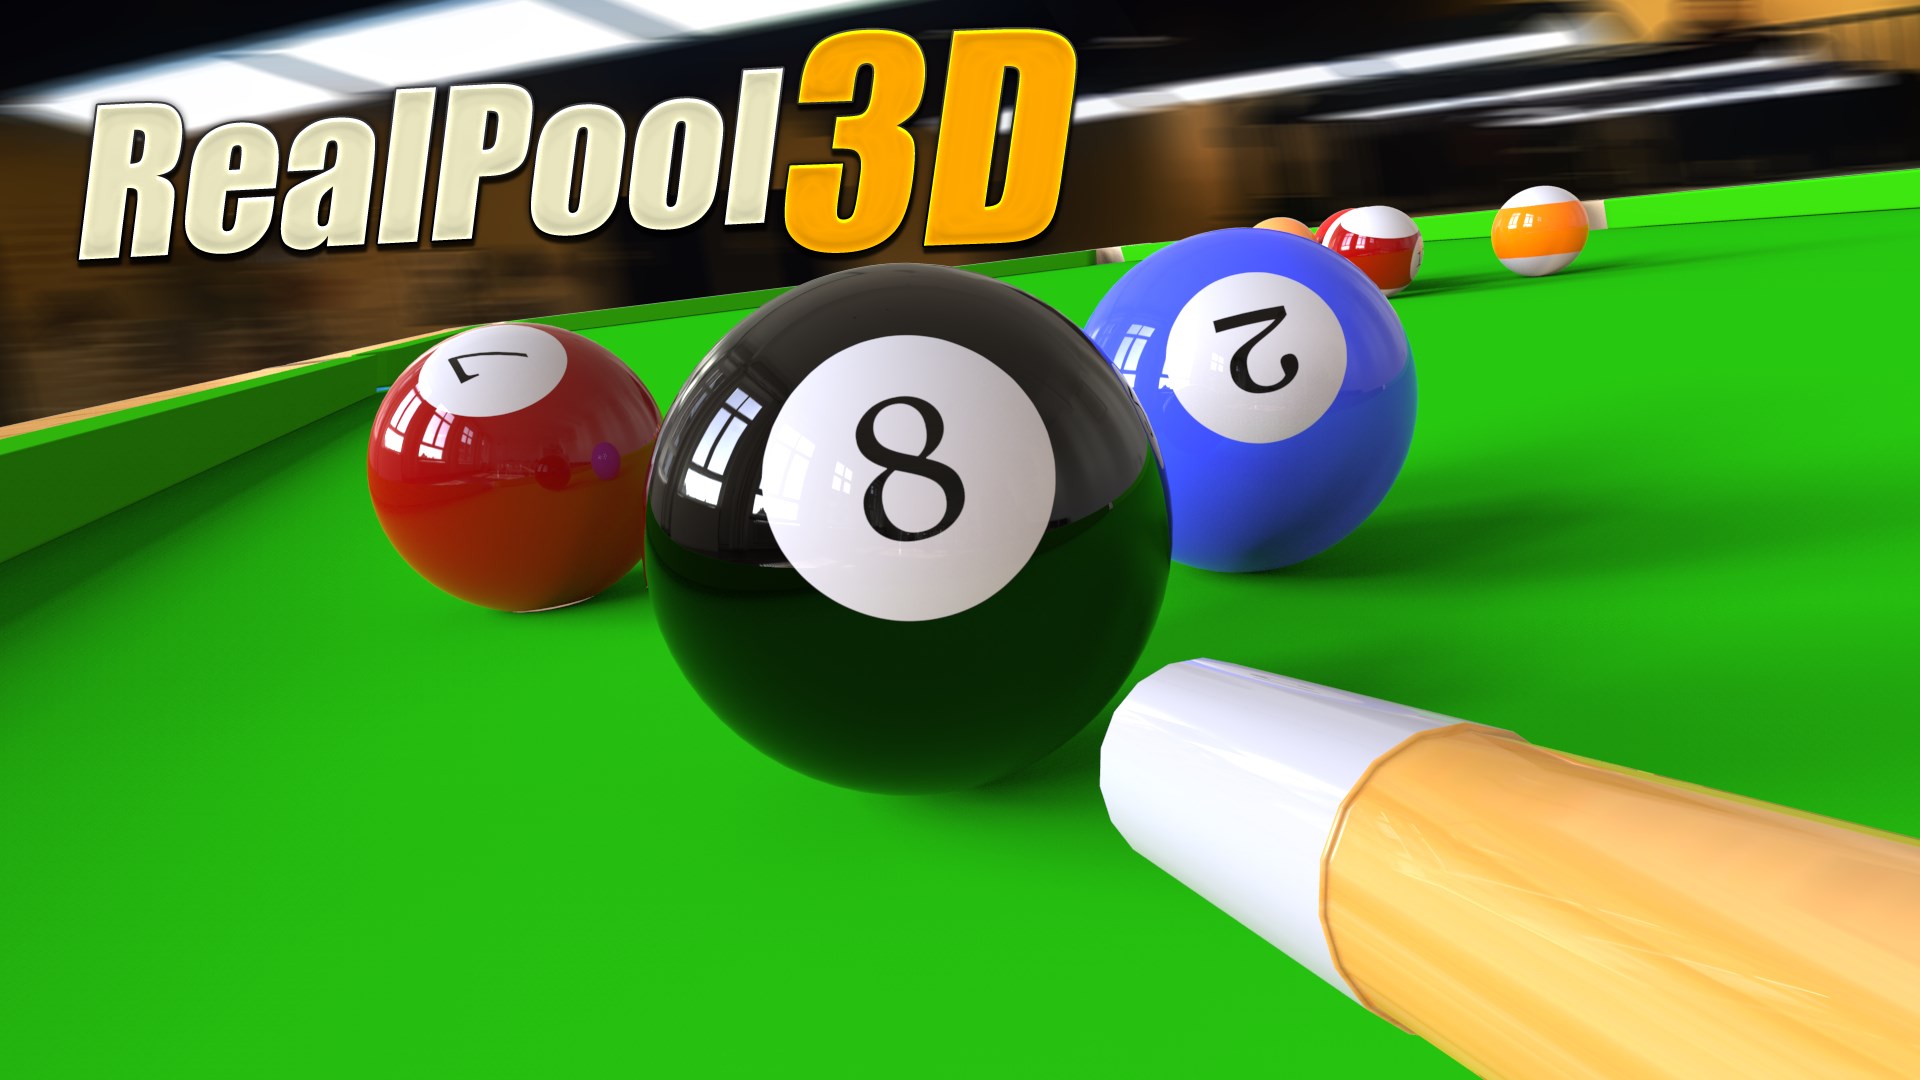 Get Real Pool 3D - Microsoft Store - 